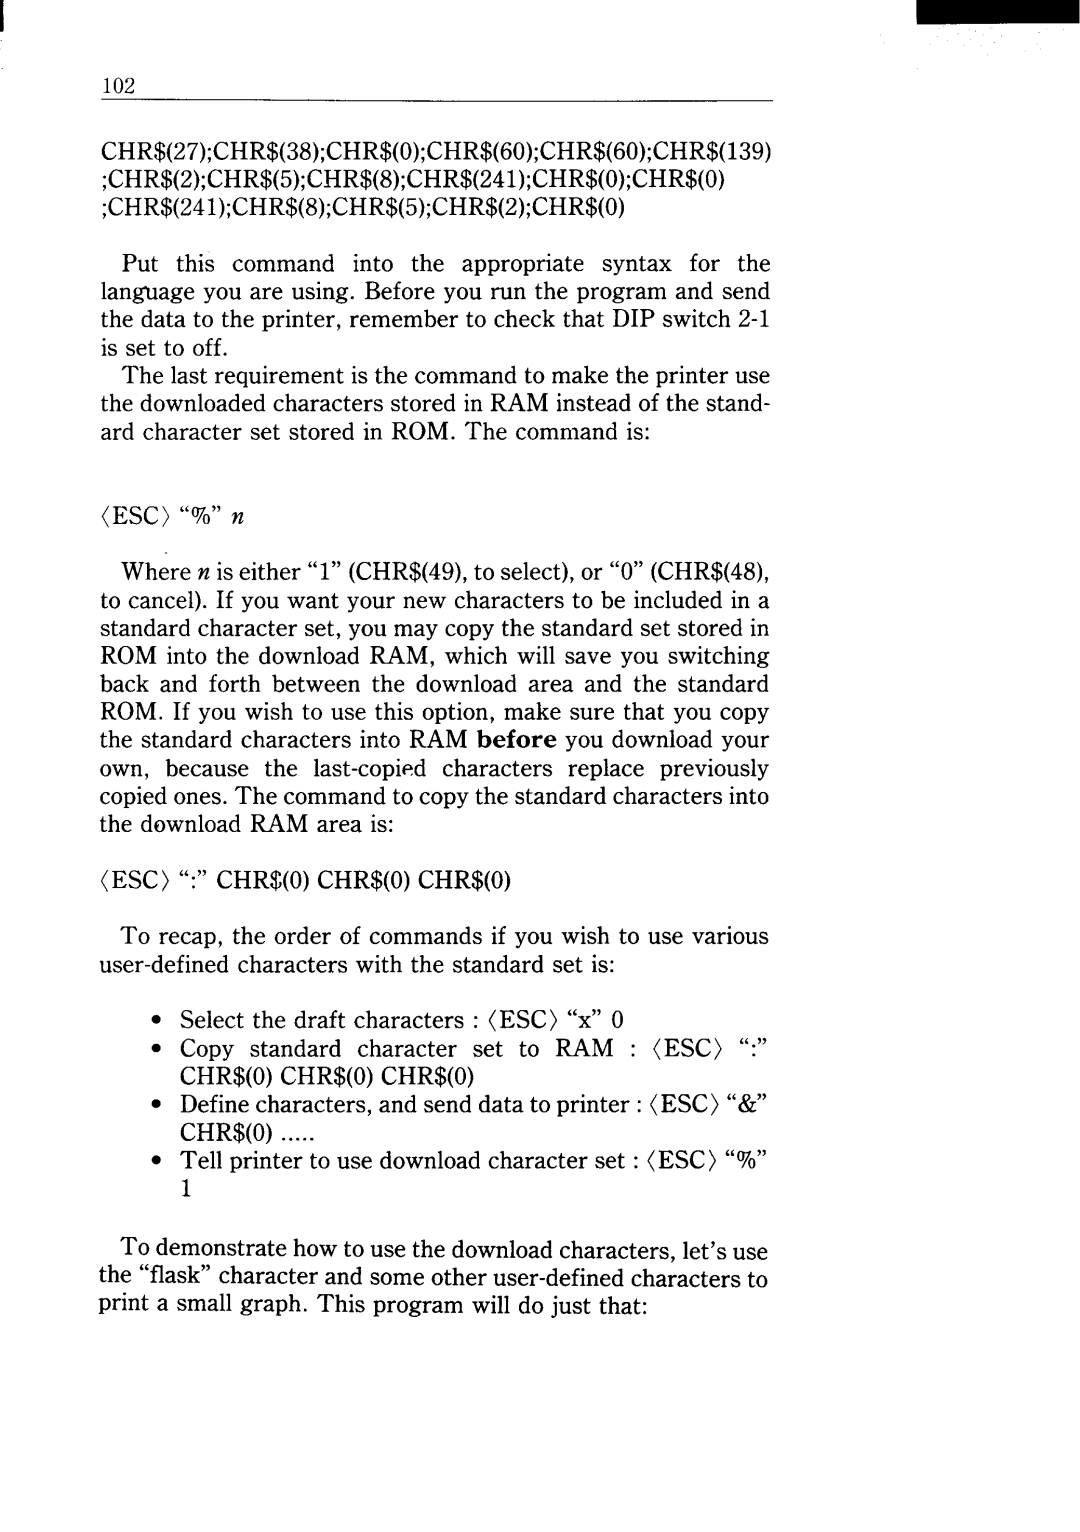 Star Micronics NX-15 user manual ESC “” CHR$0 CHR$0 CHR$0 